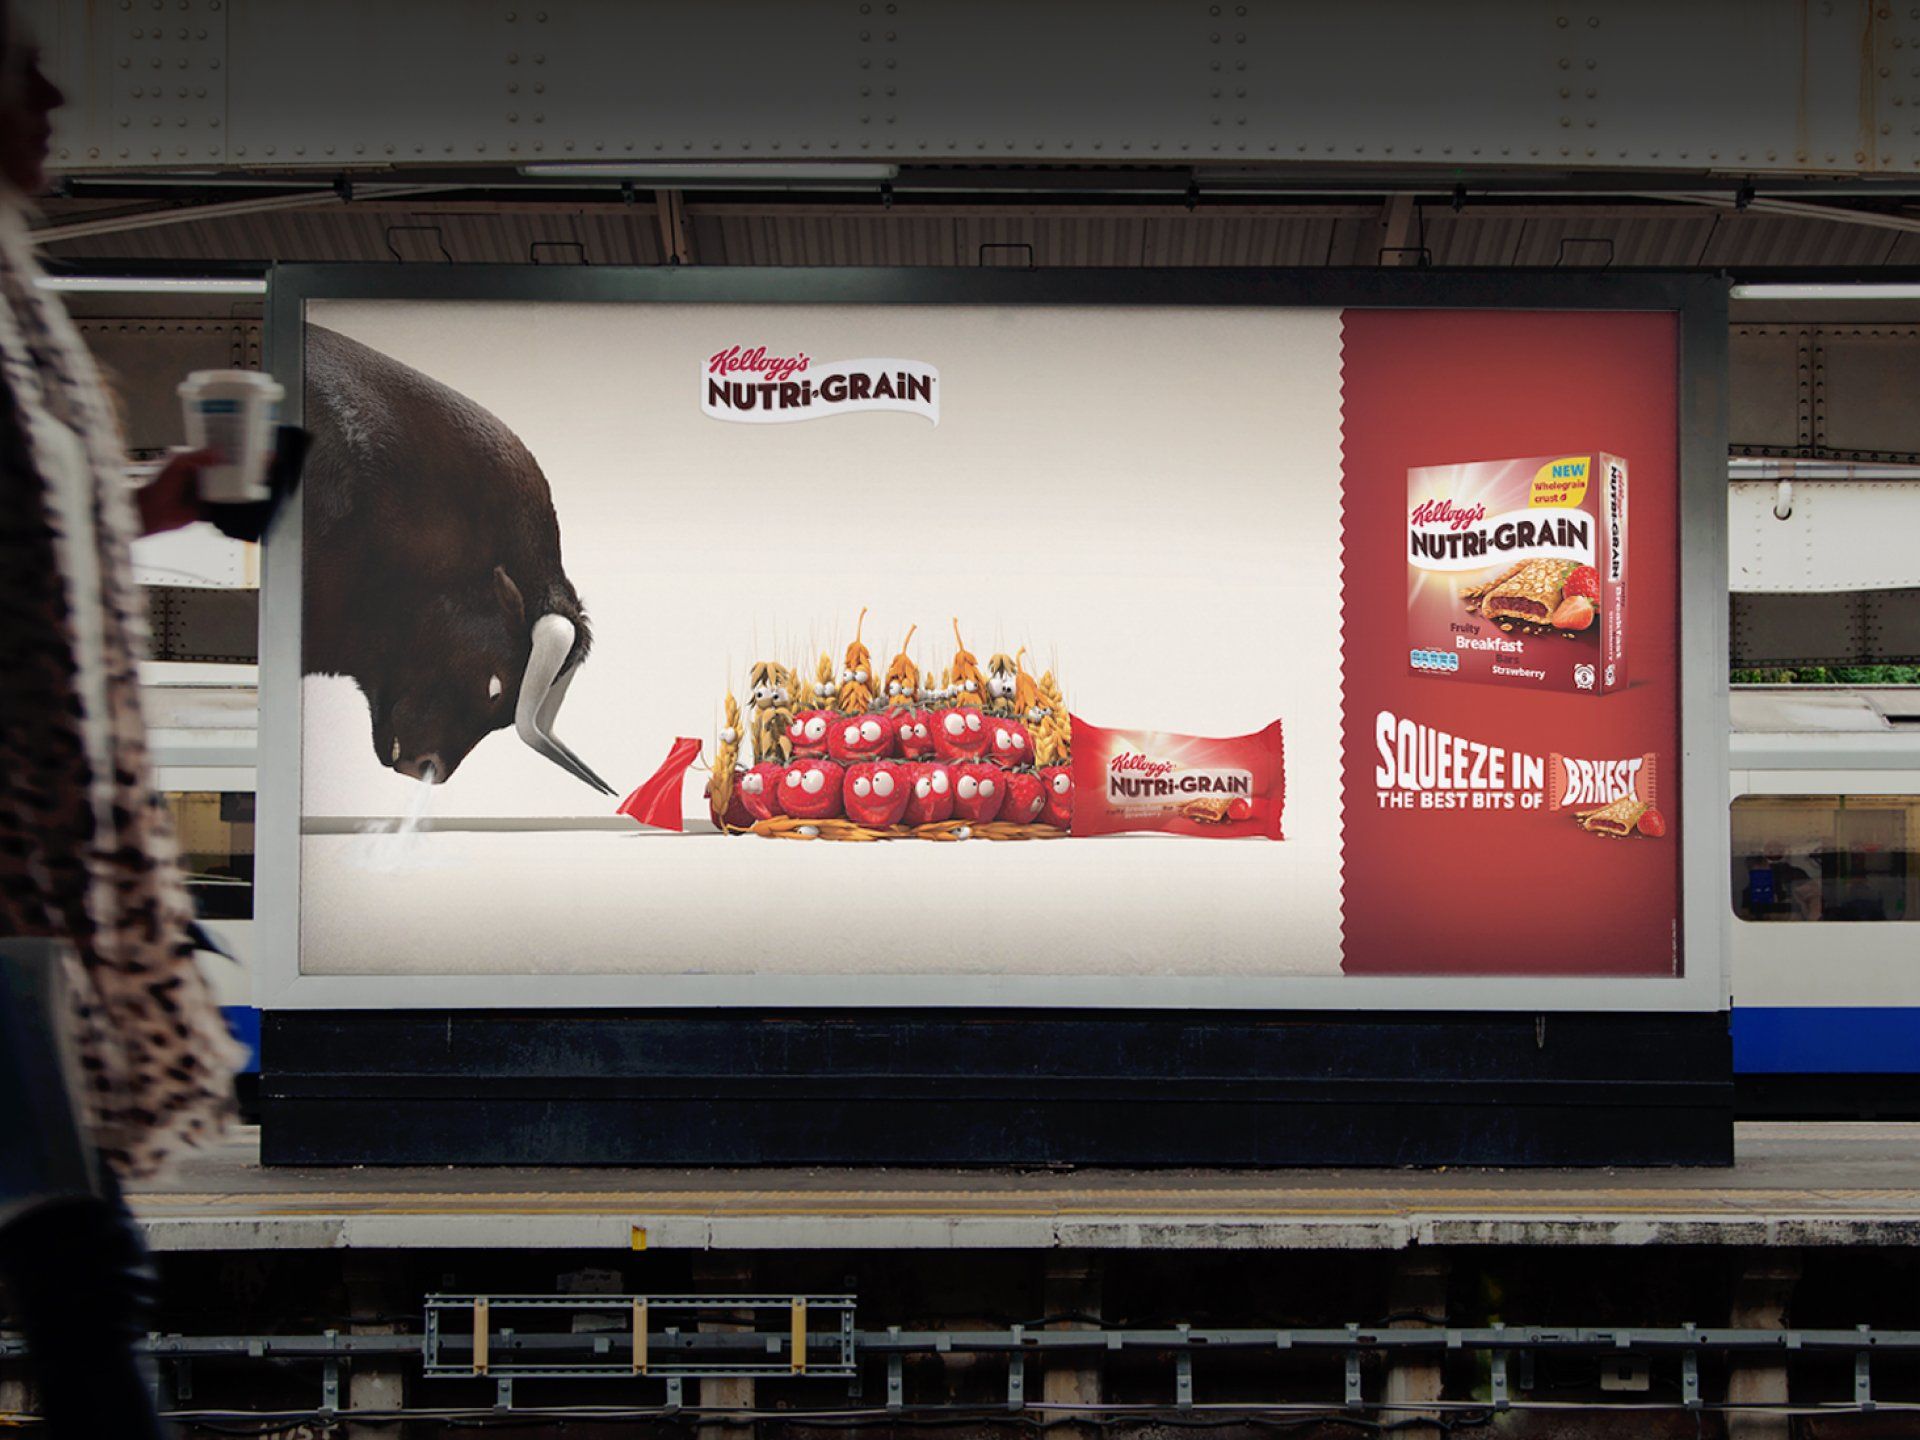 London TfL platform billboard advert for Kellogg's Nutri-Grain. © The Animo Group Ltd.